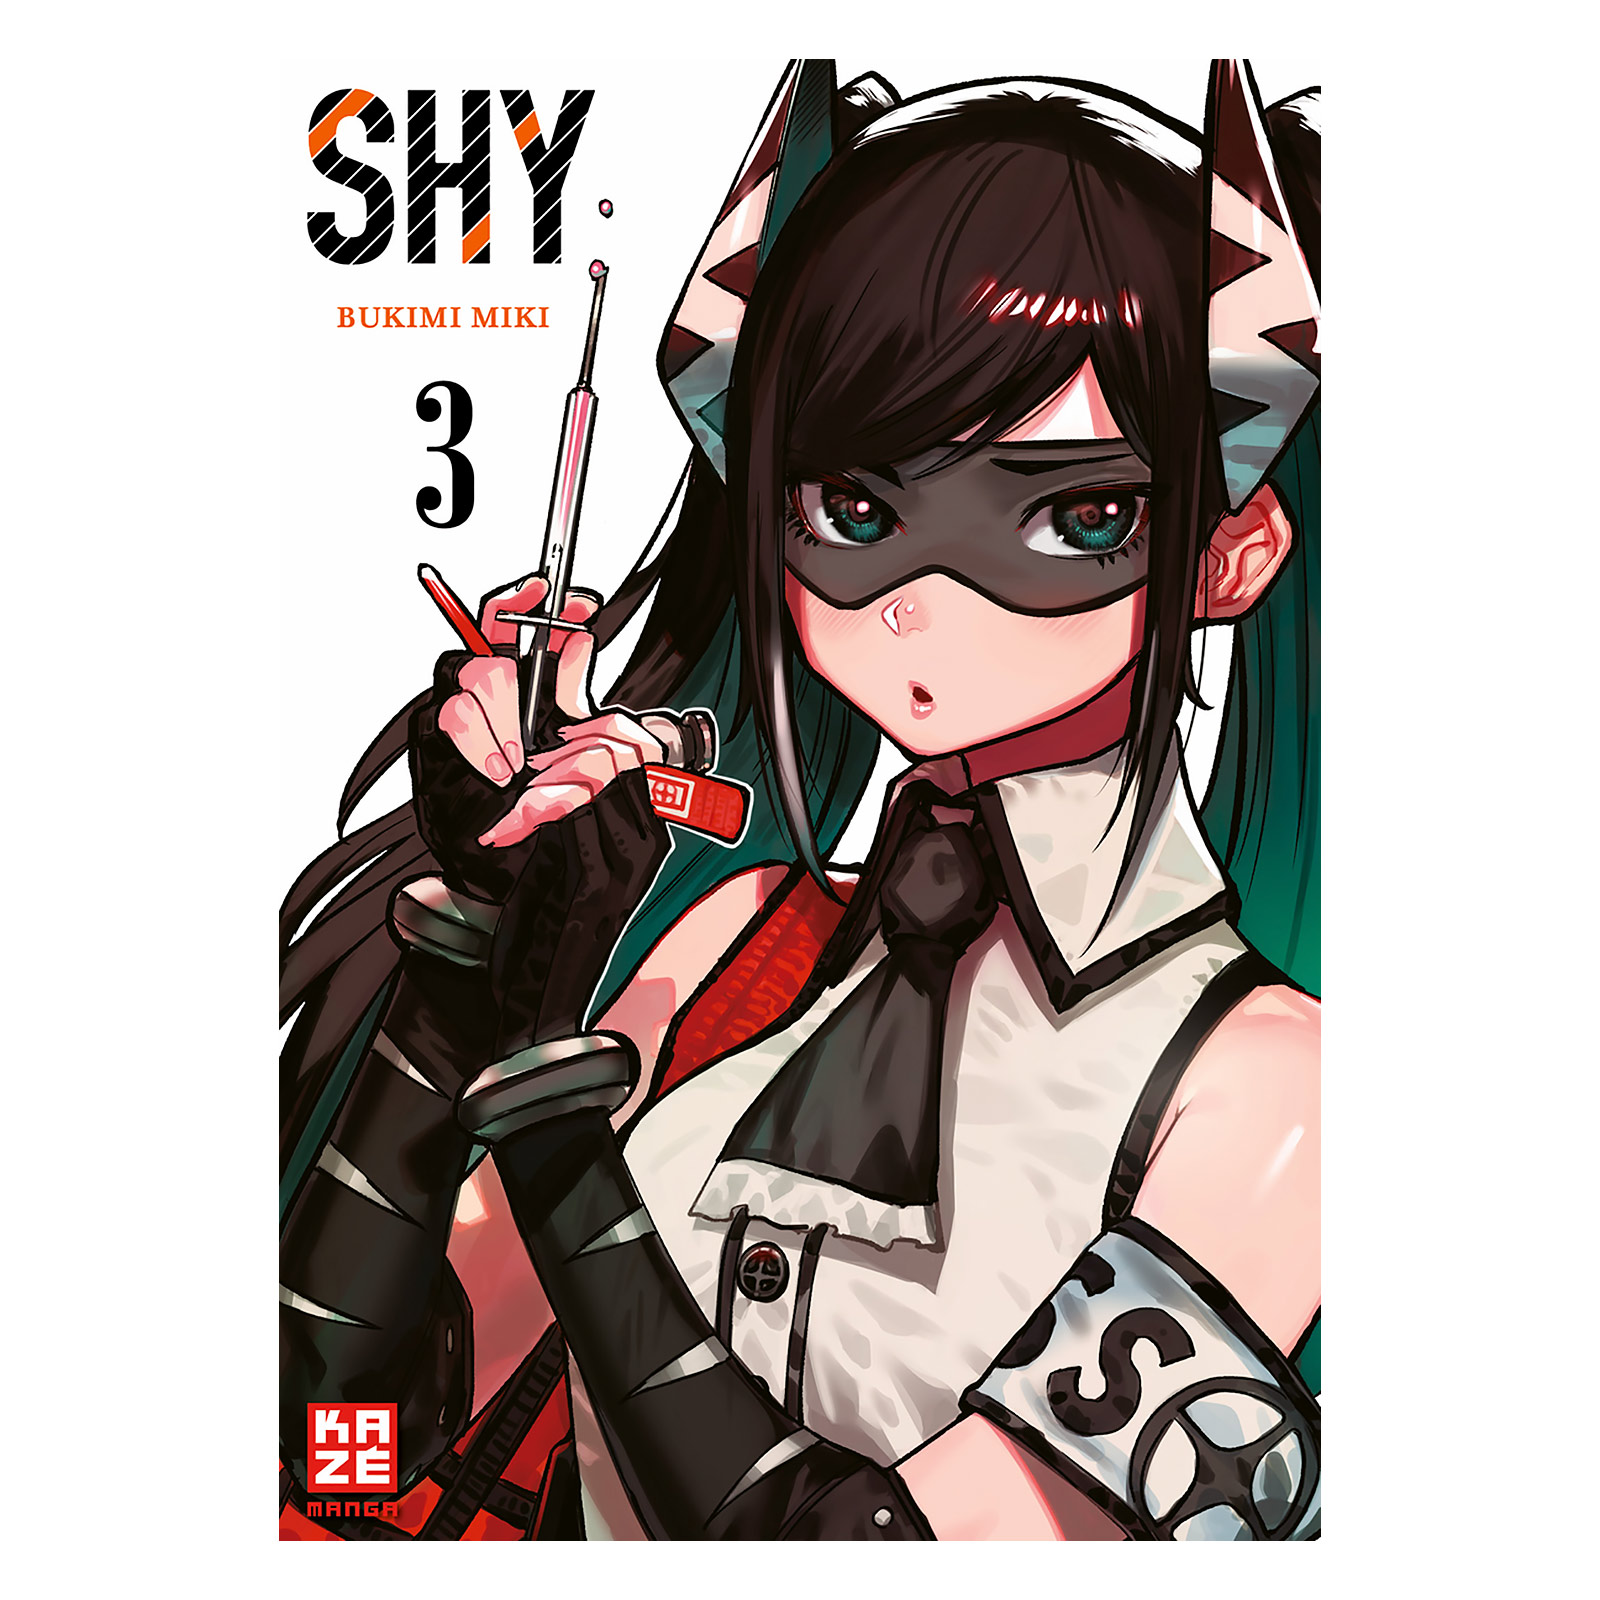 SHY - Volume 3 Paperback